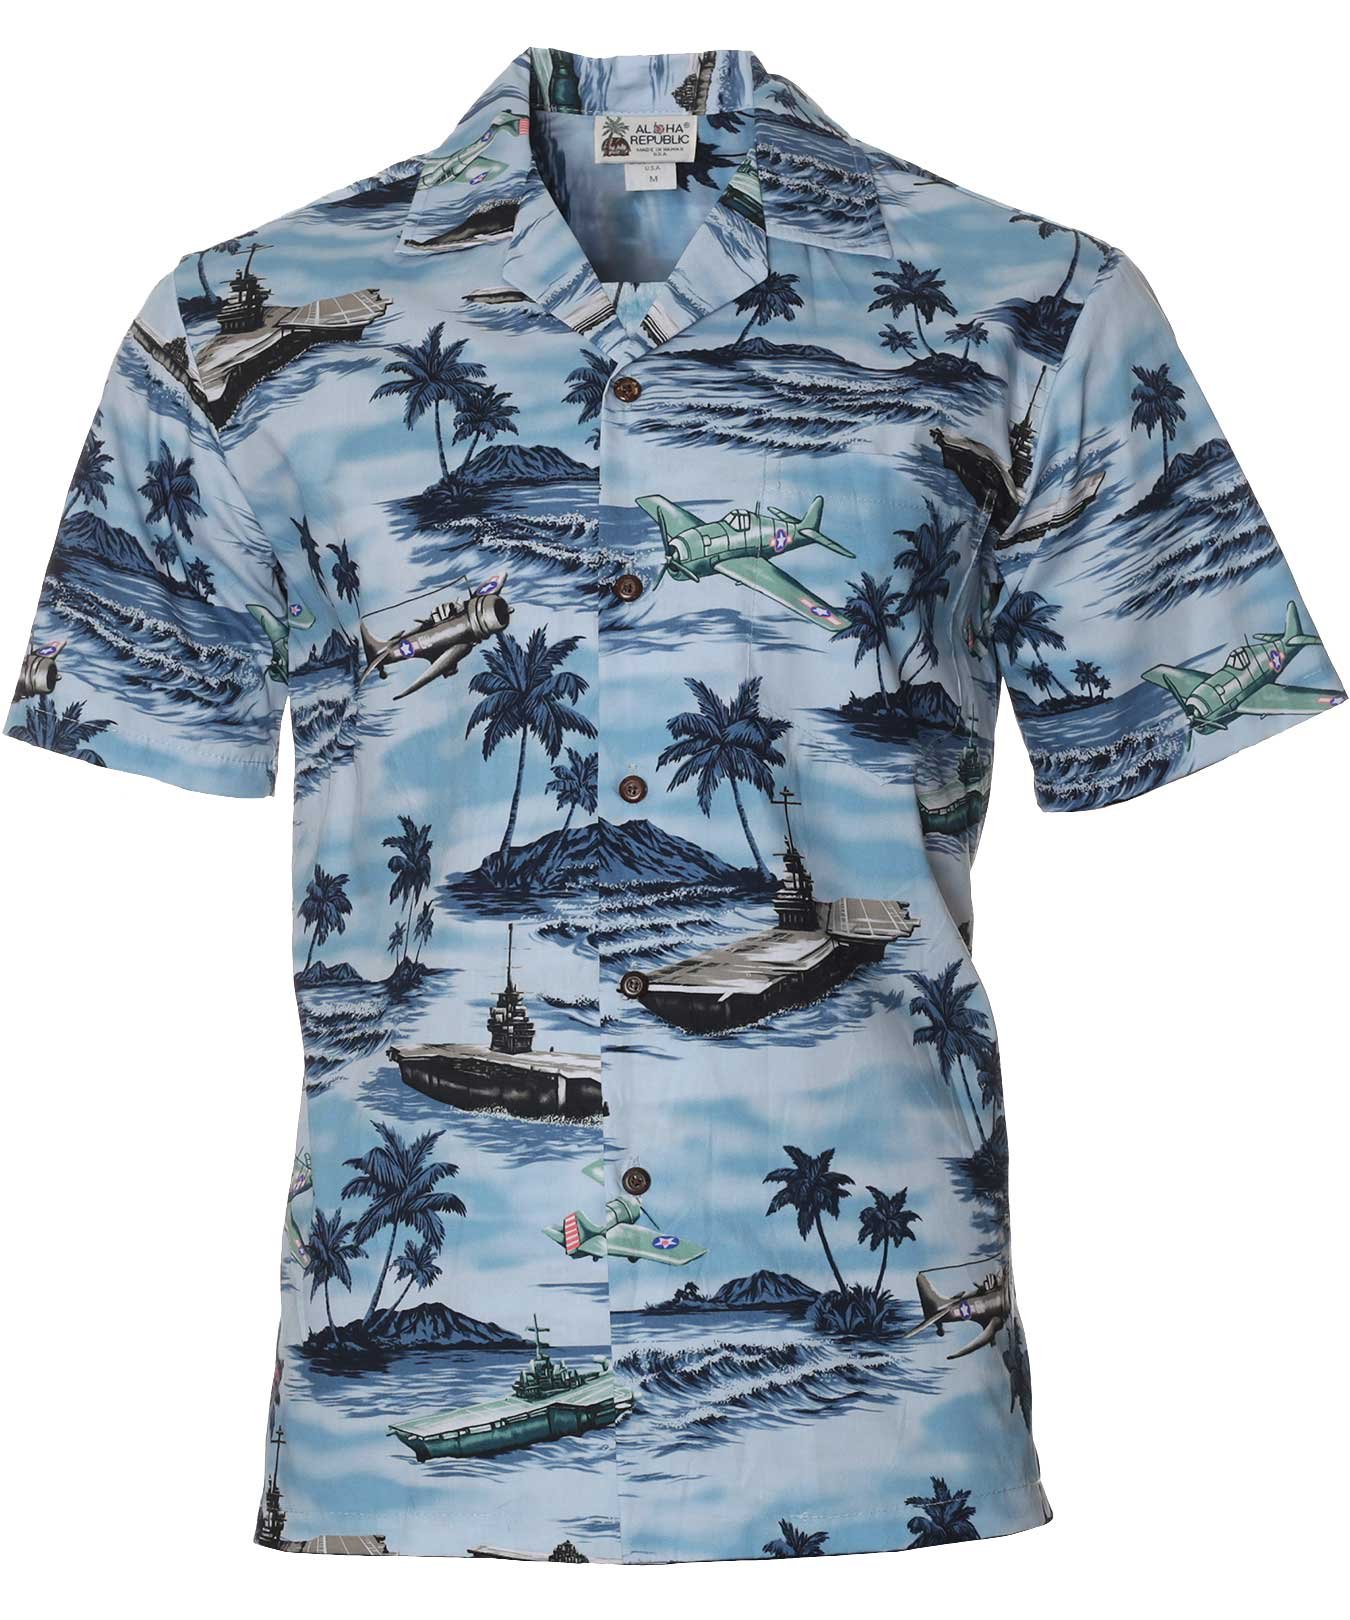 Flet of the Pacific Men's Cotton Aloha Shirt